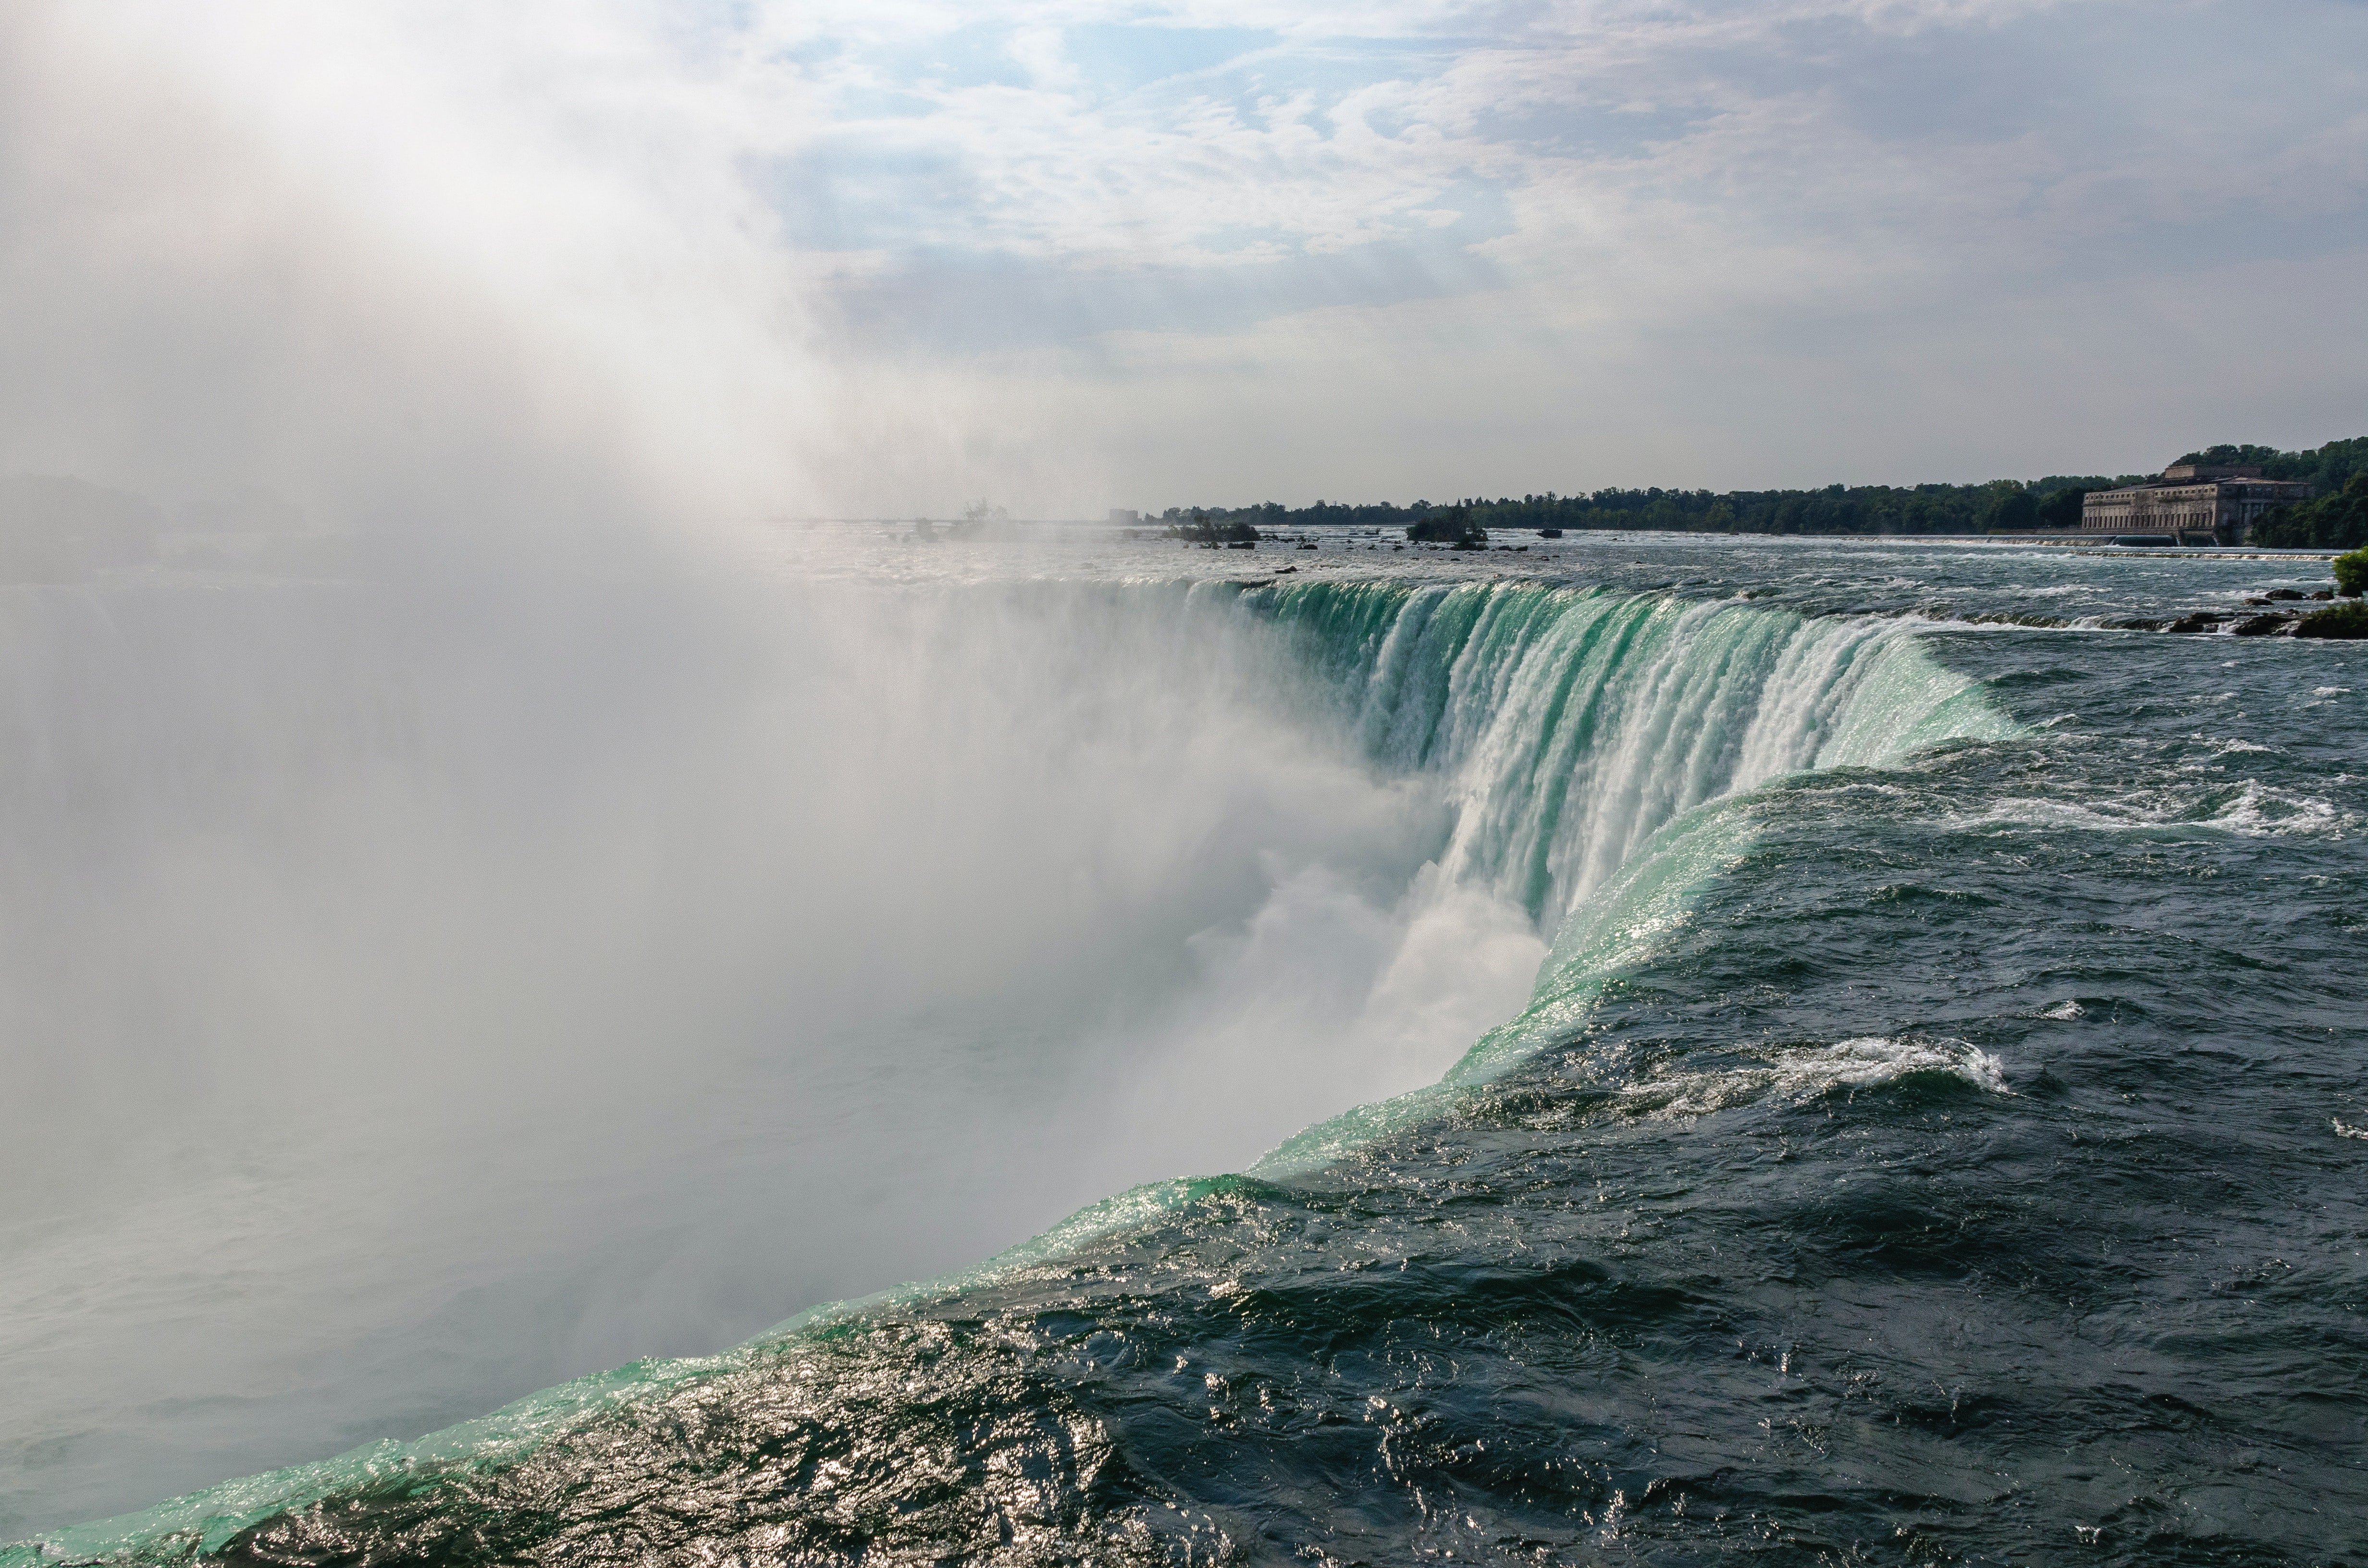 I still treasure our times together at Niagara Falls | Source: Pexels